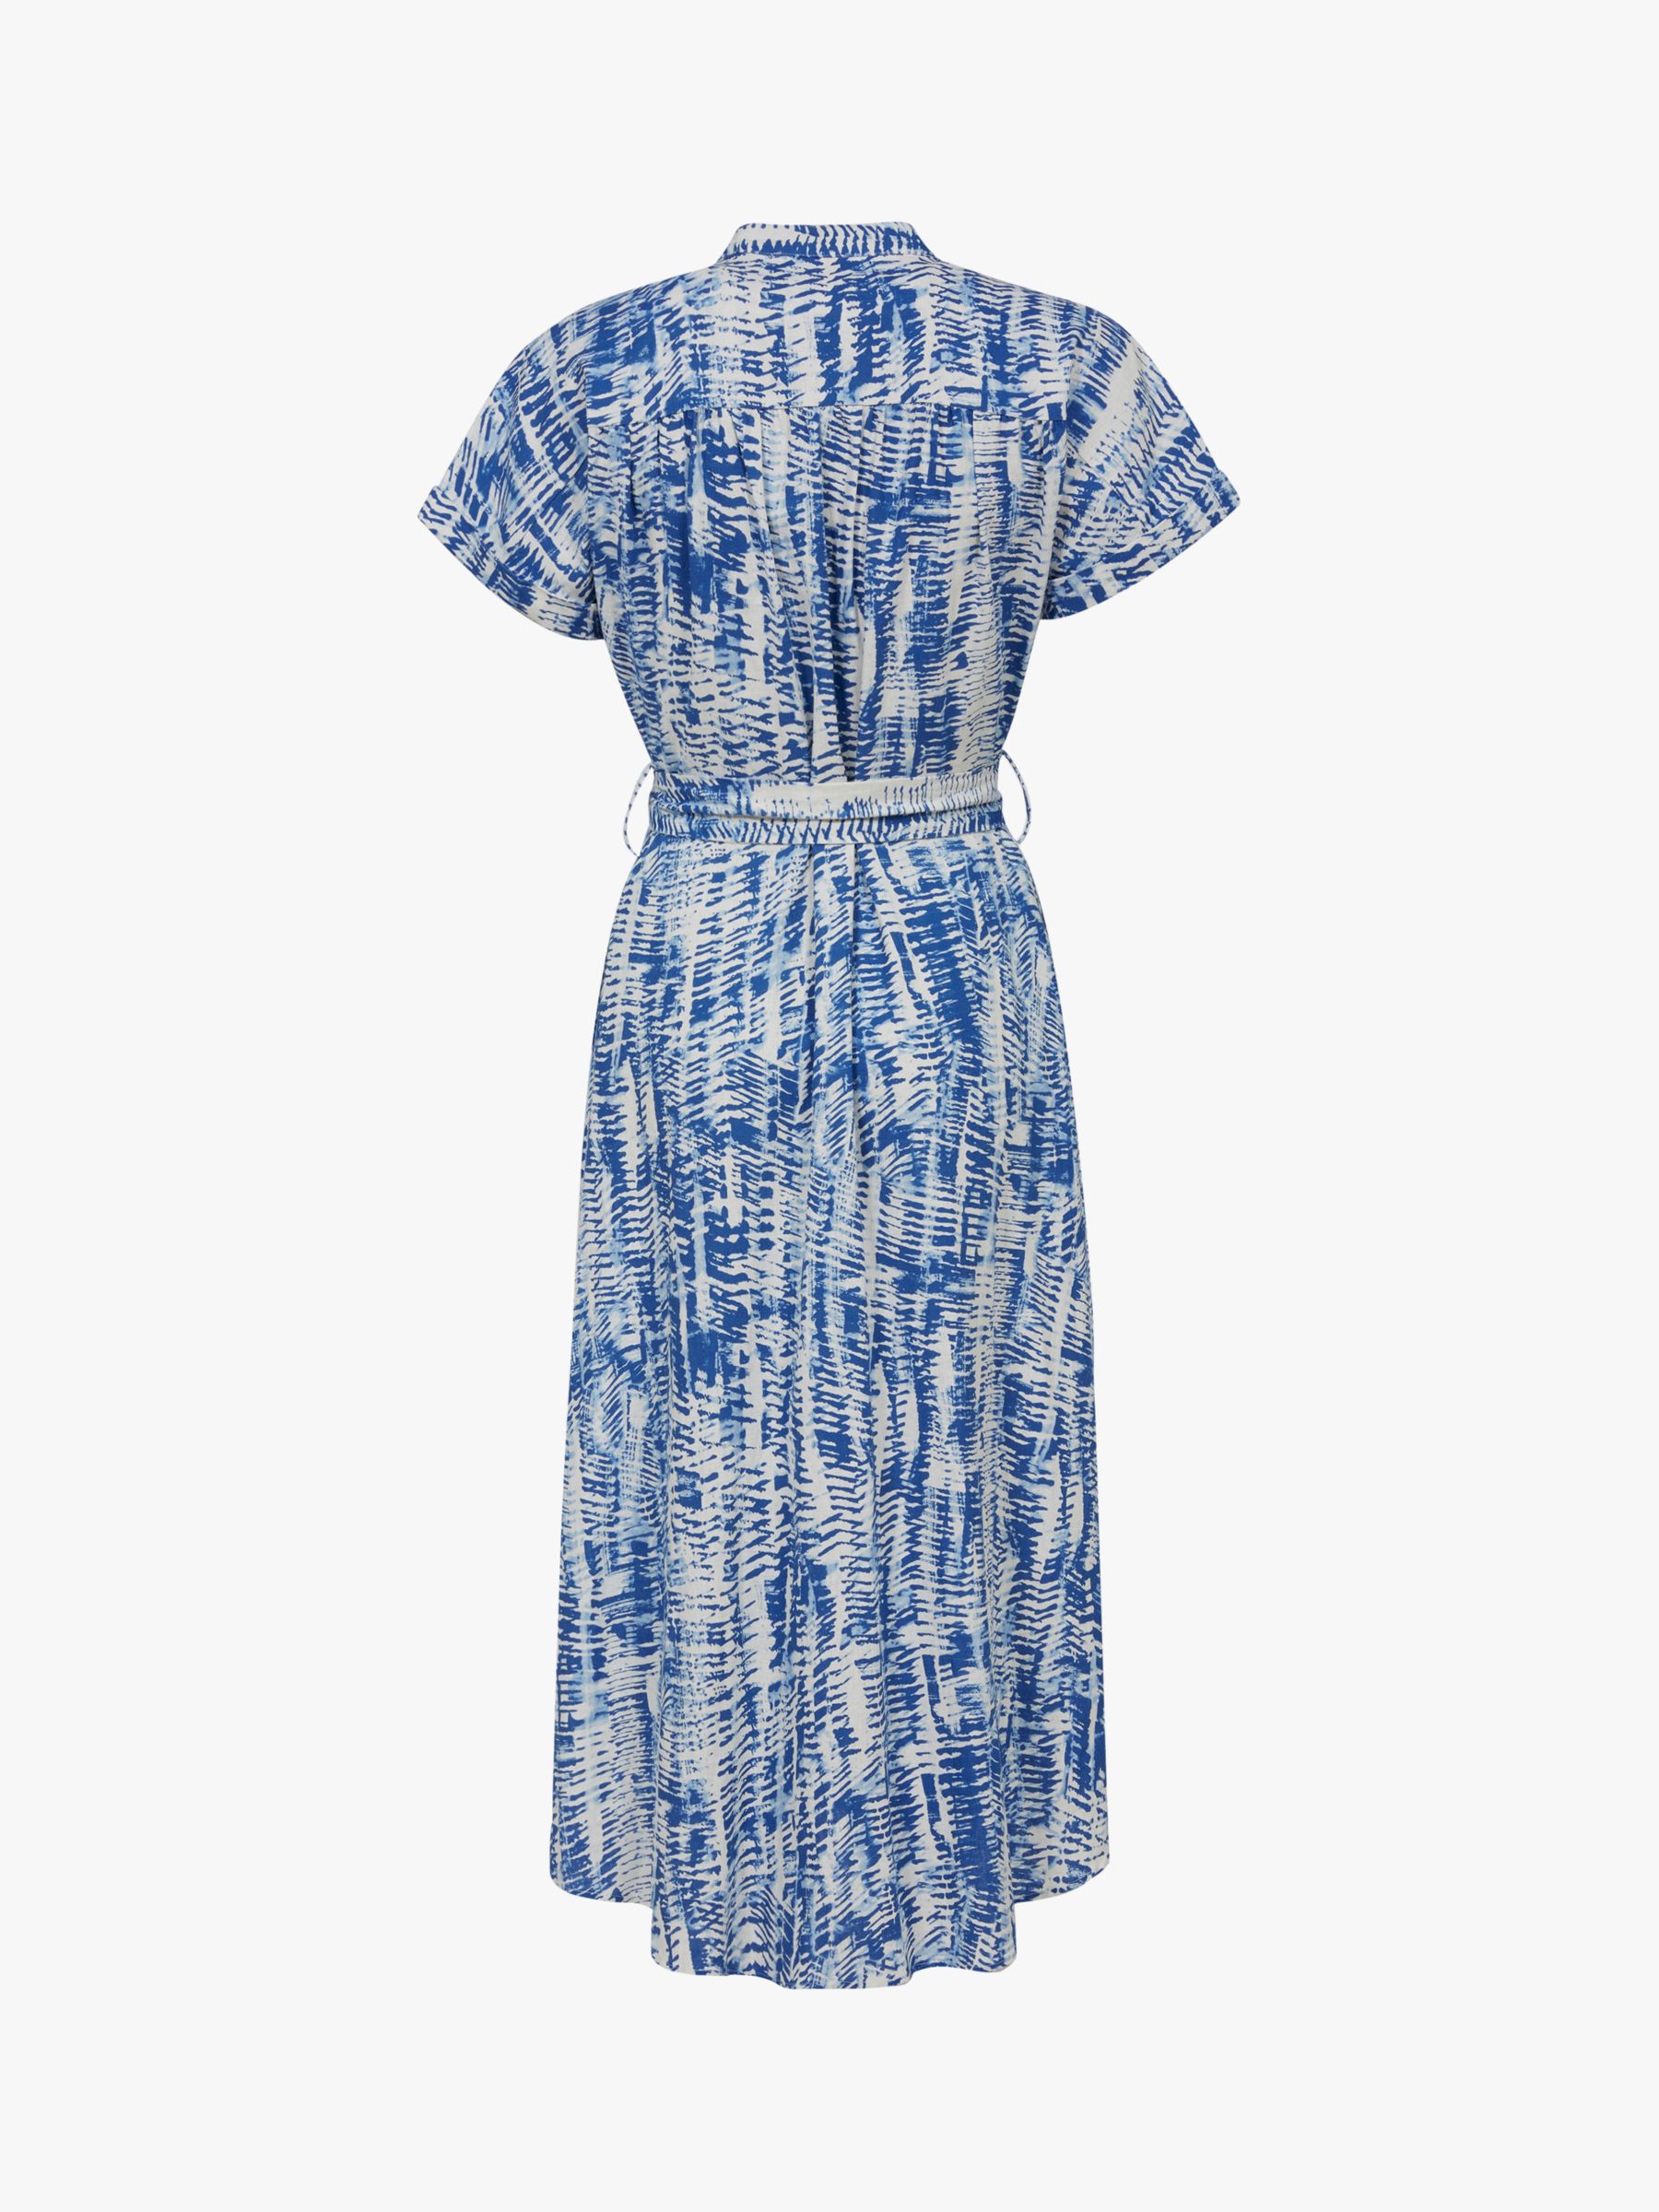 Celtic & Co. Chevron Print Linen Blend Shirt Dress, Indigo, 18